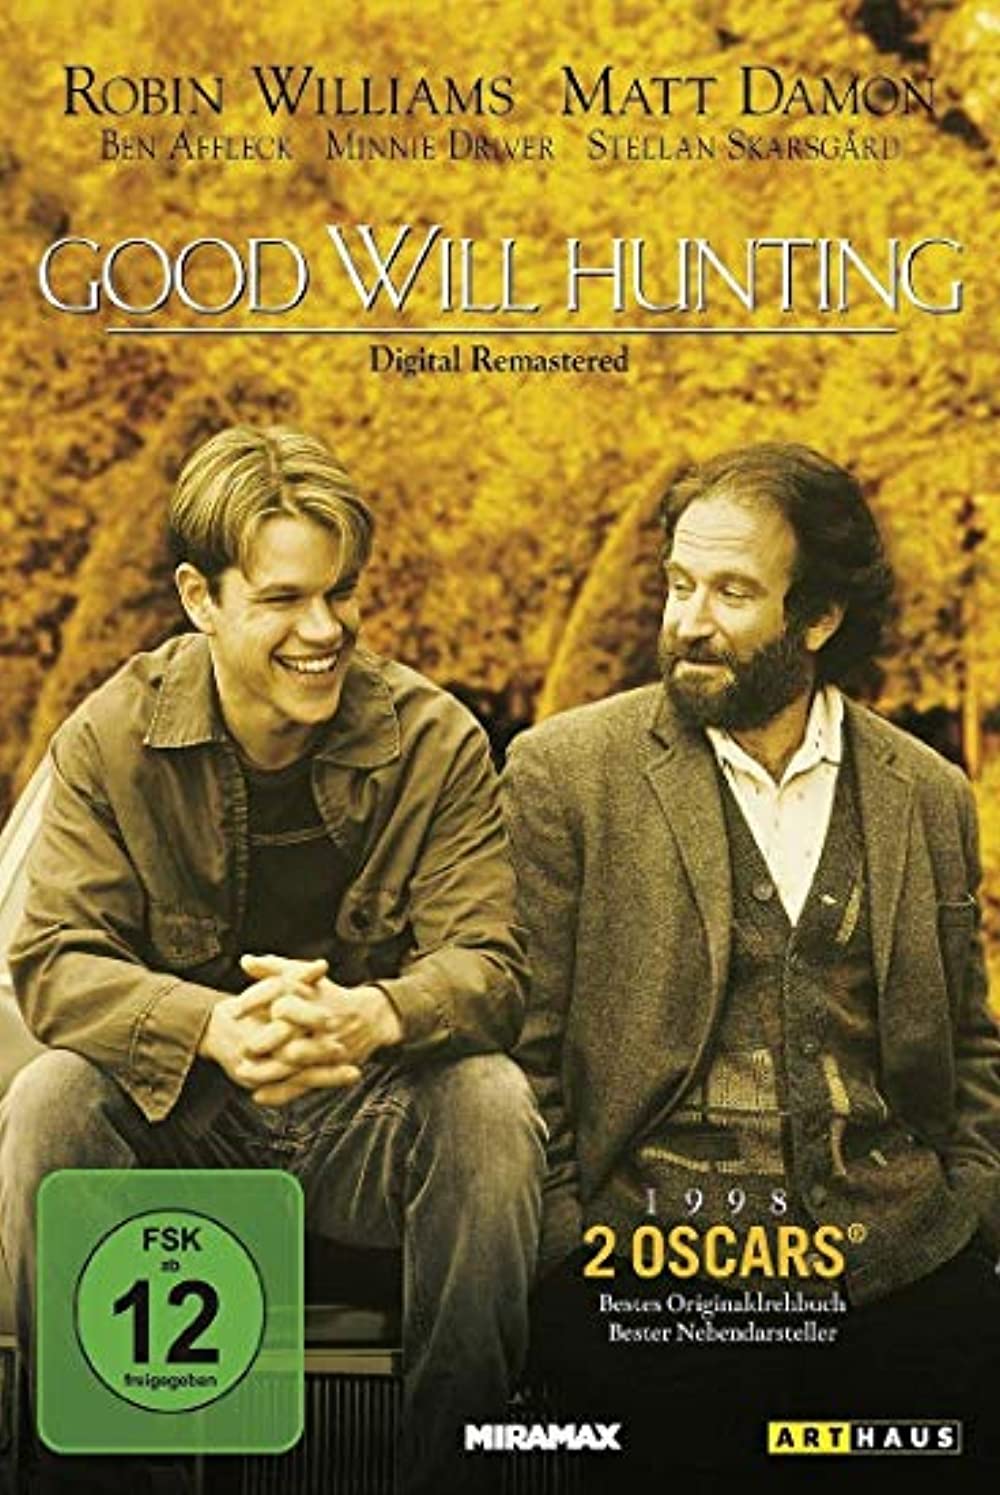 Filmbeschreibung zu Good Will Hunting